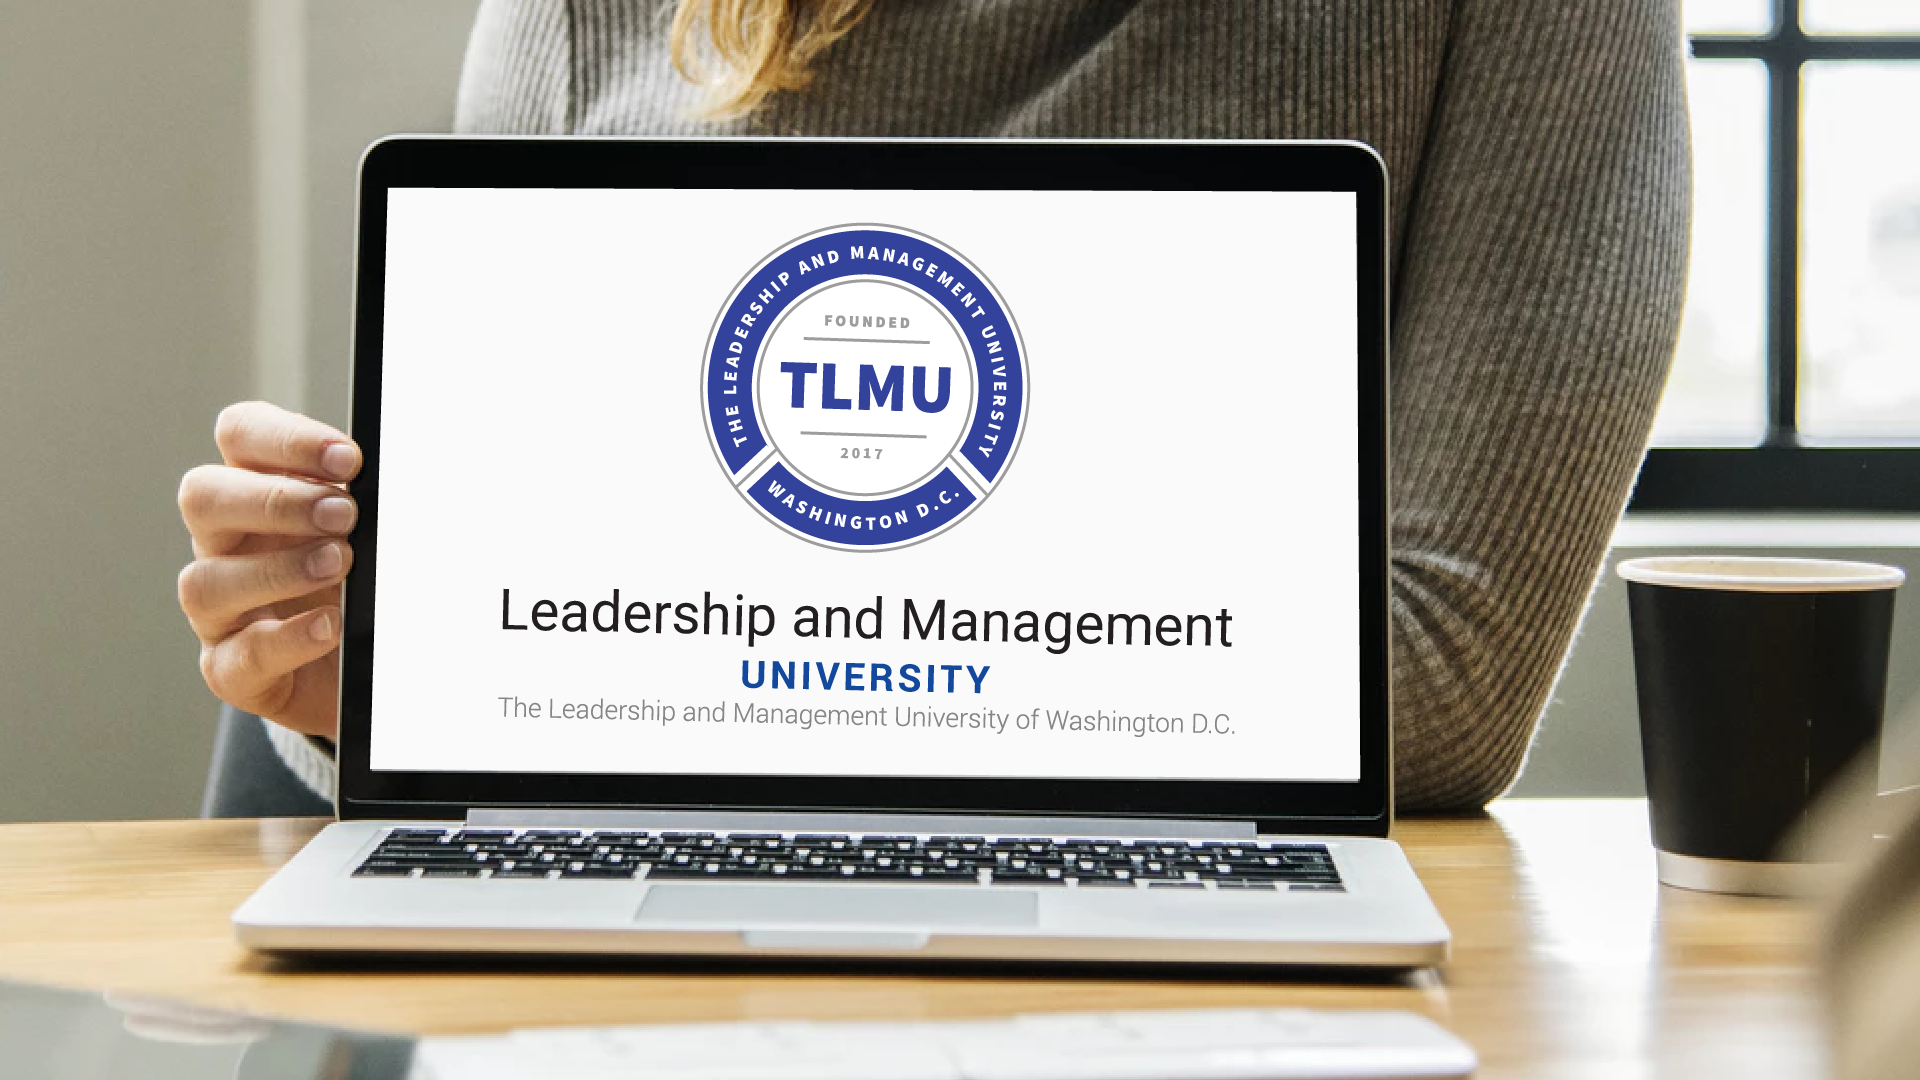 The Leadership Management University